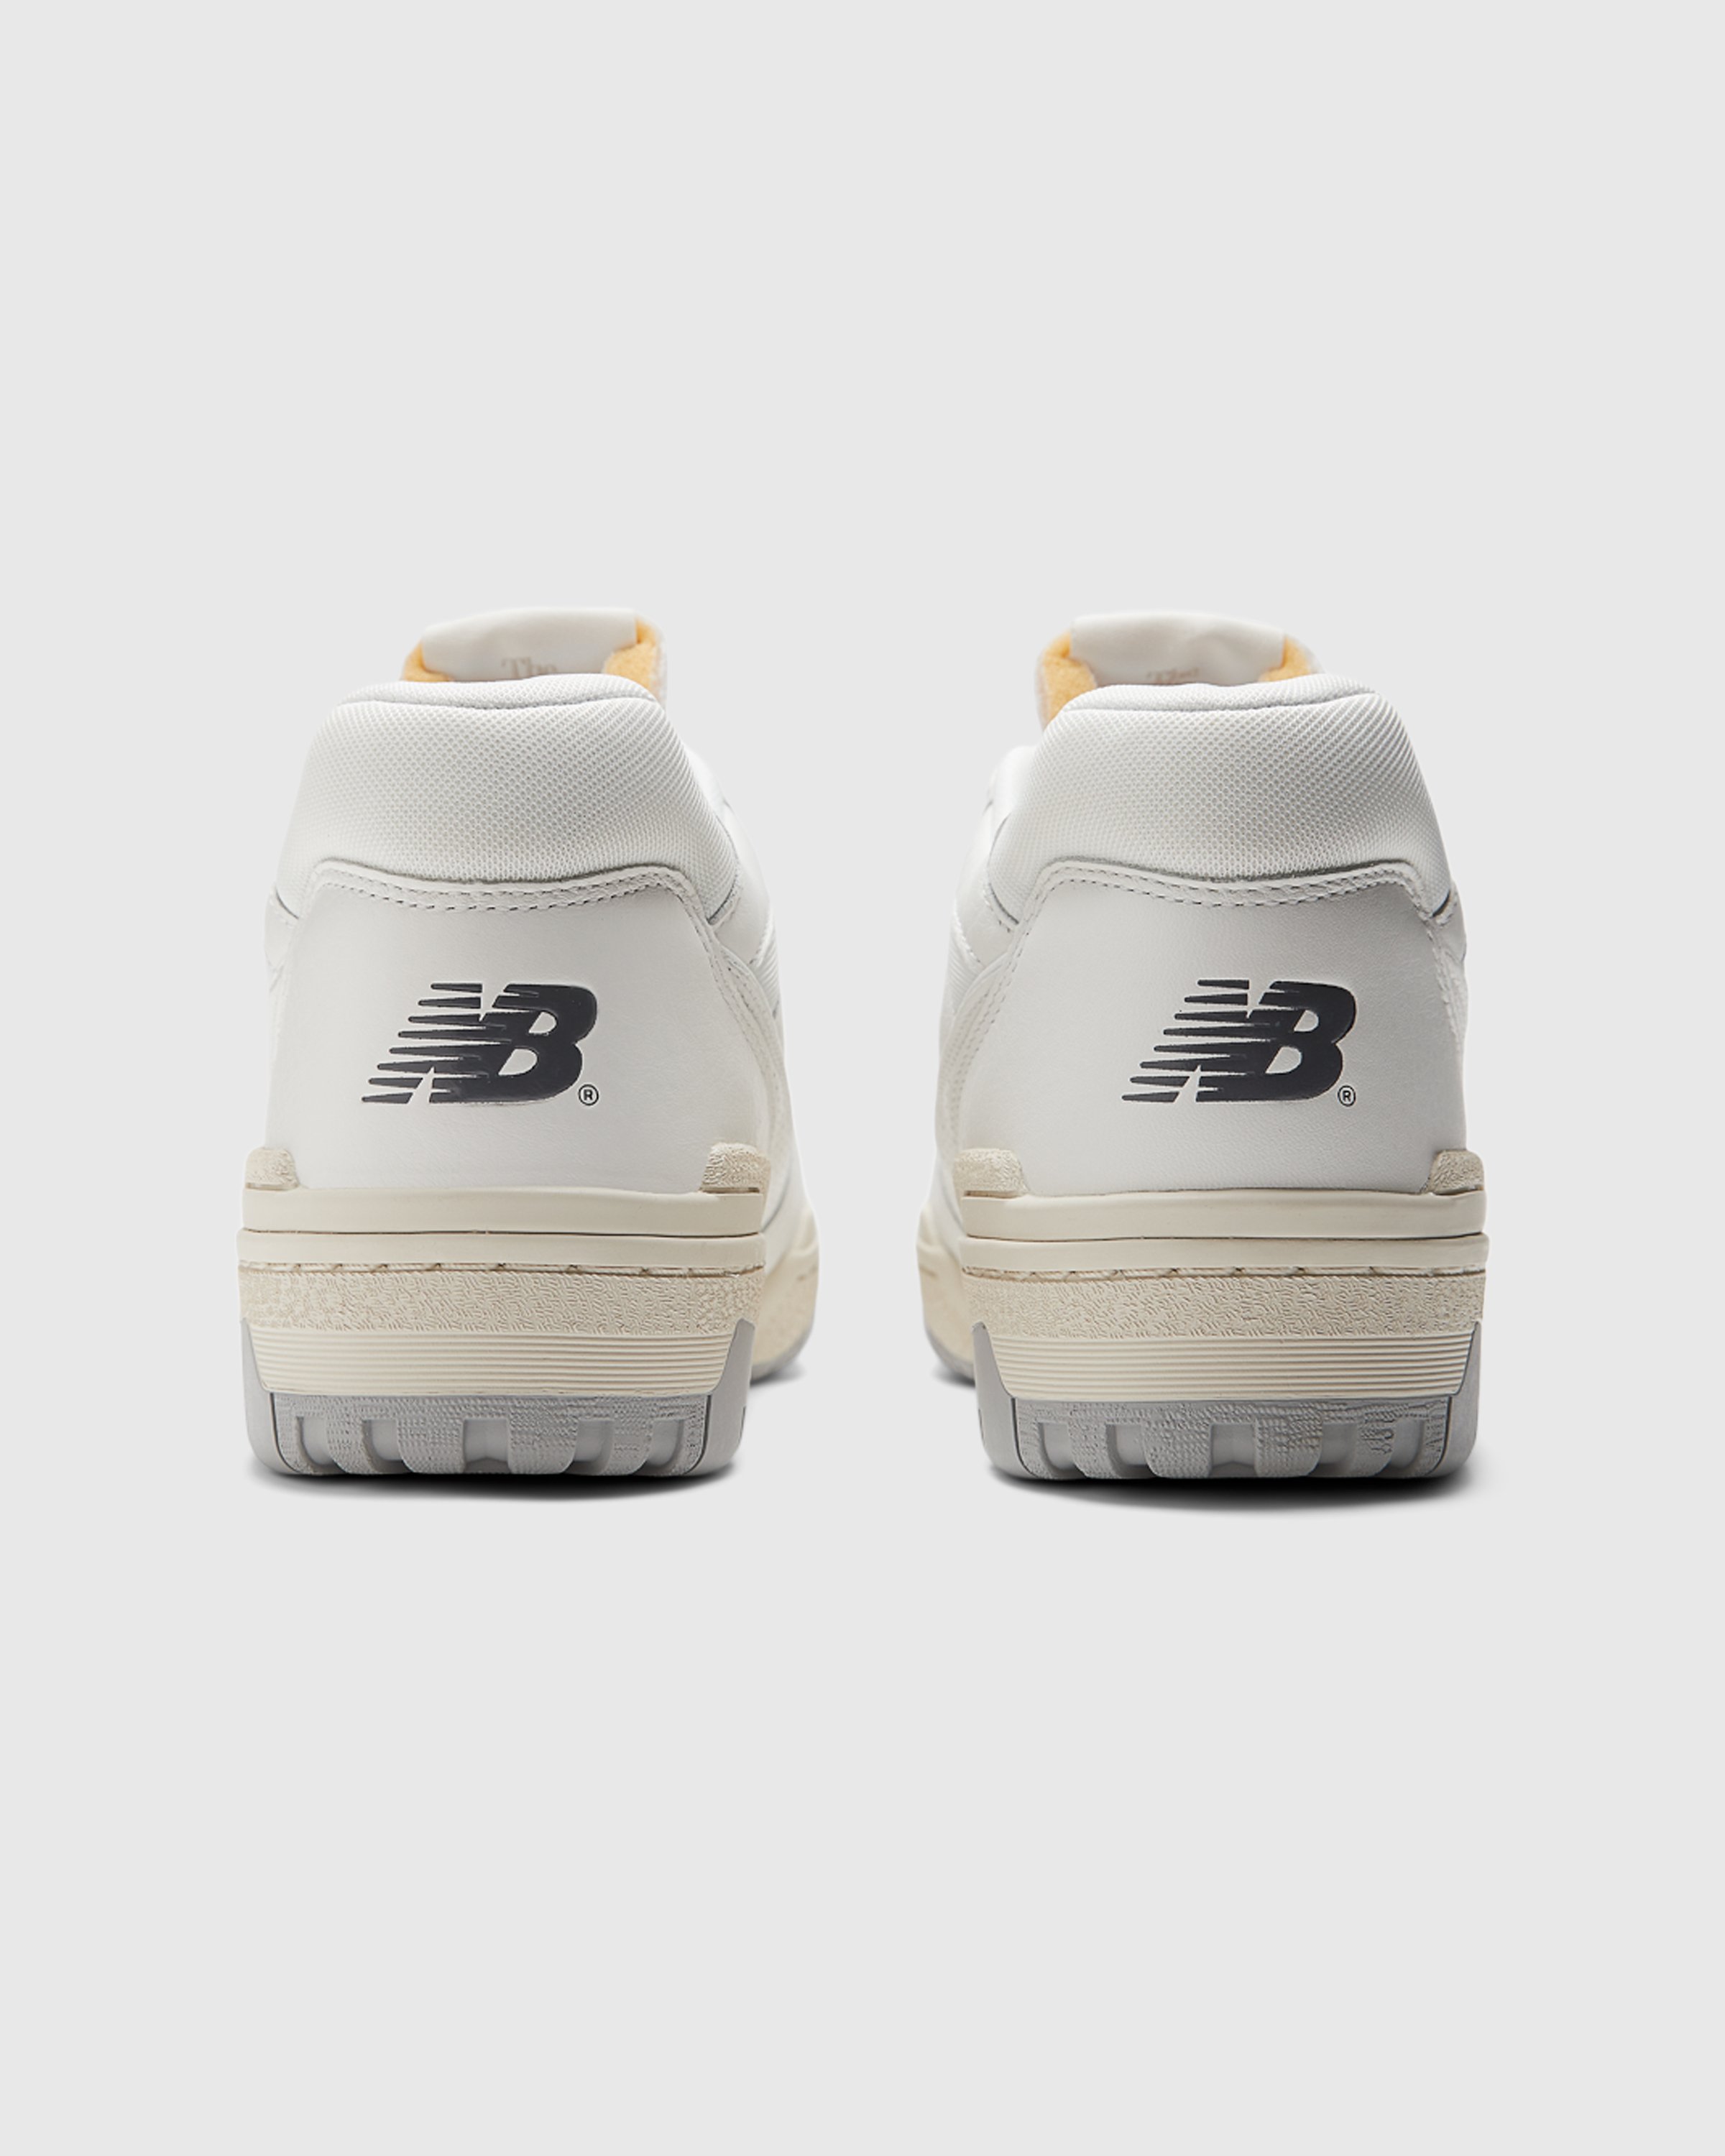 New Balance - BB 550 PWG White - Footwear - White - Image 6